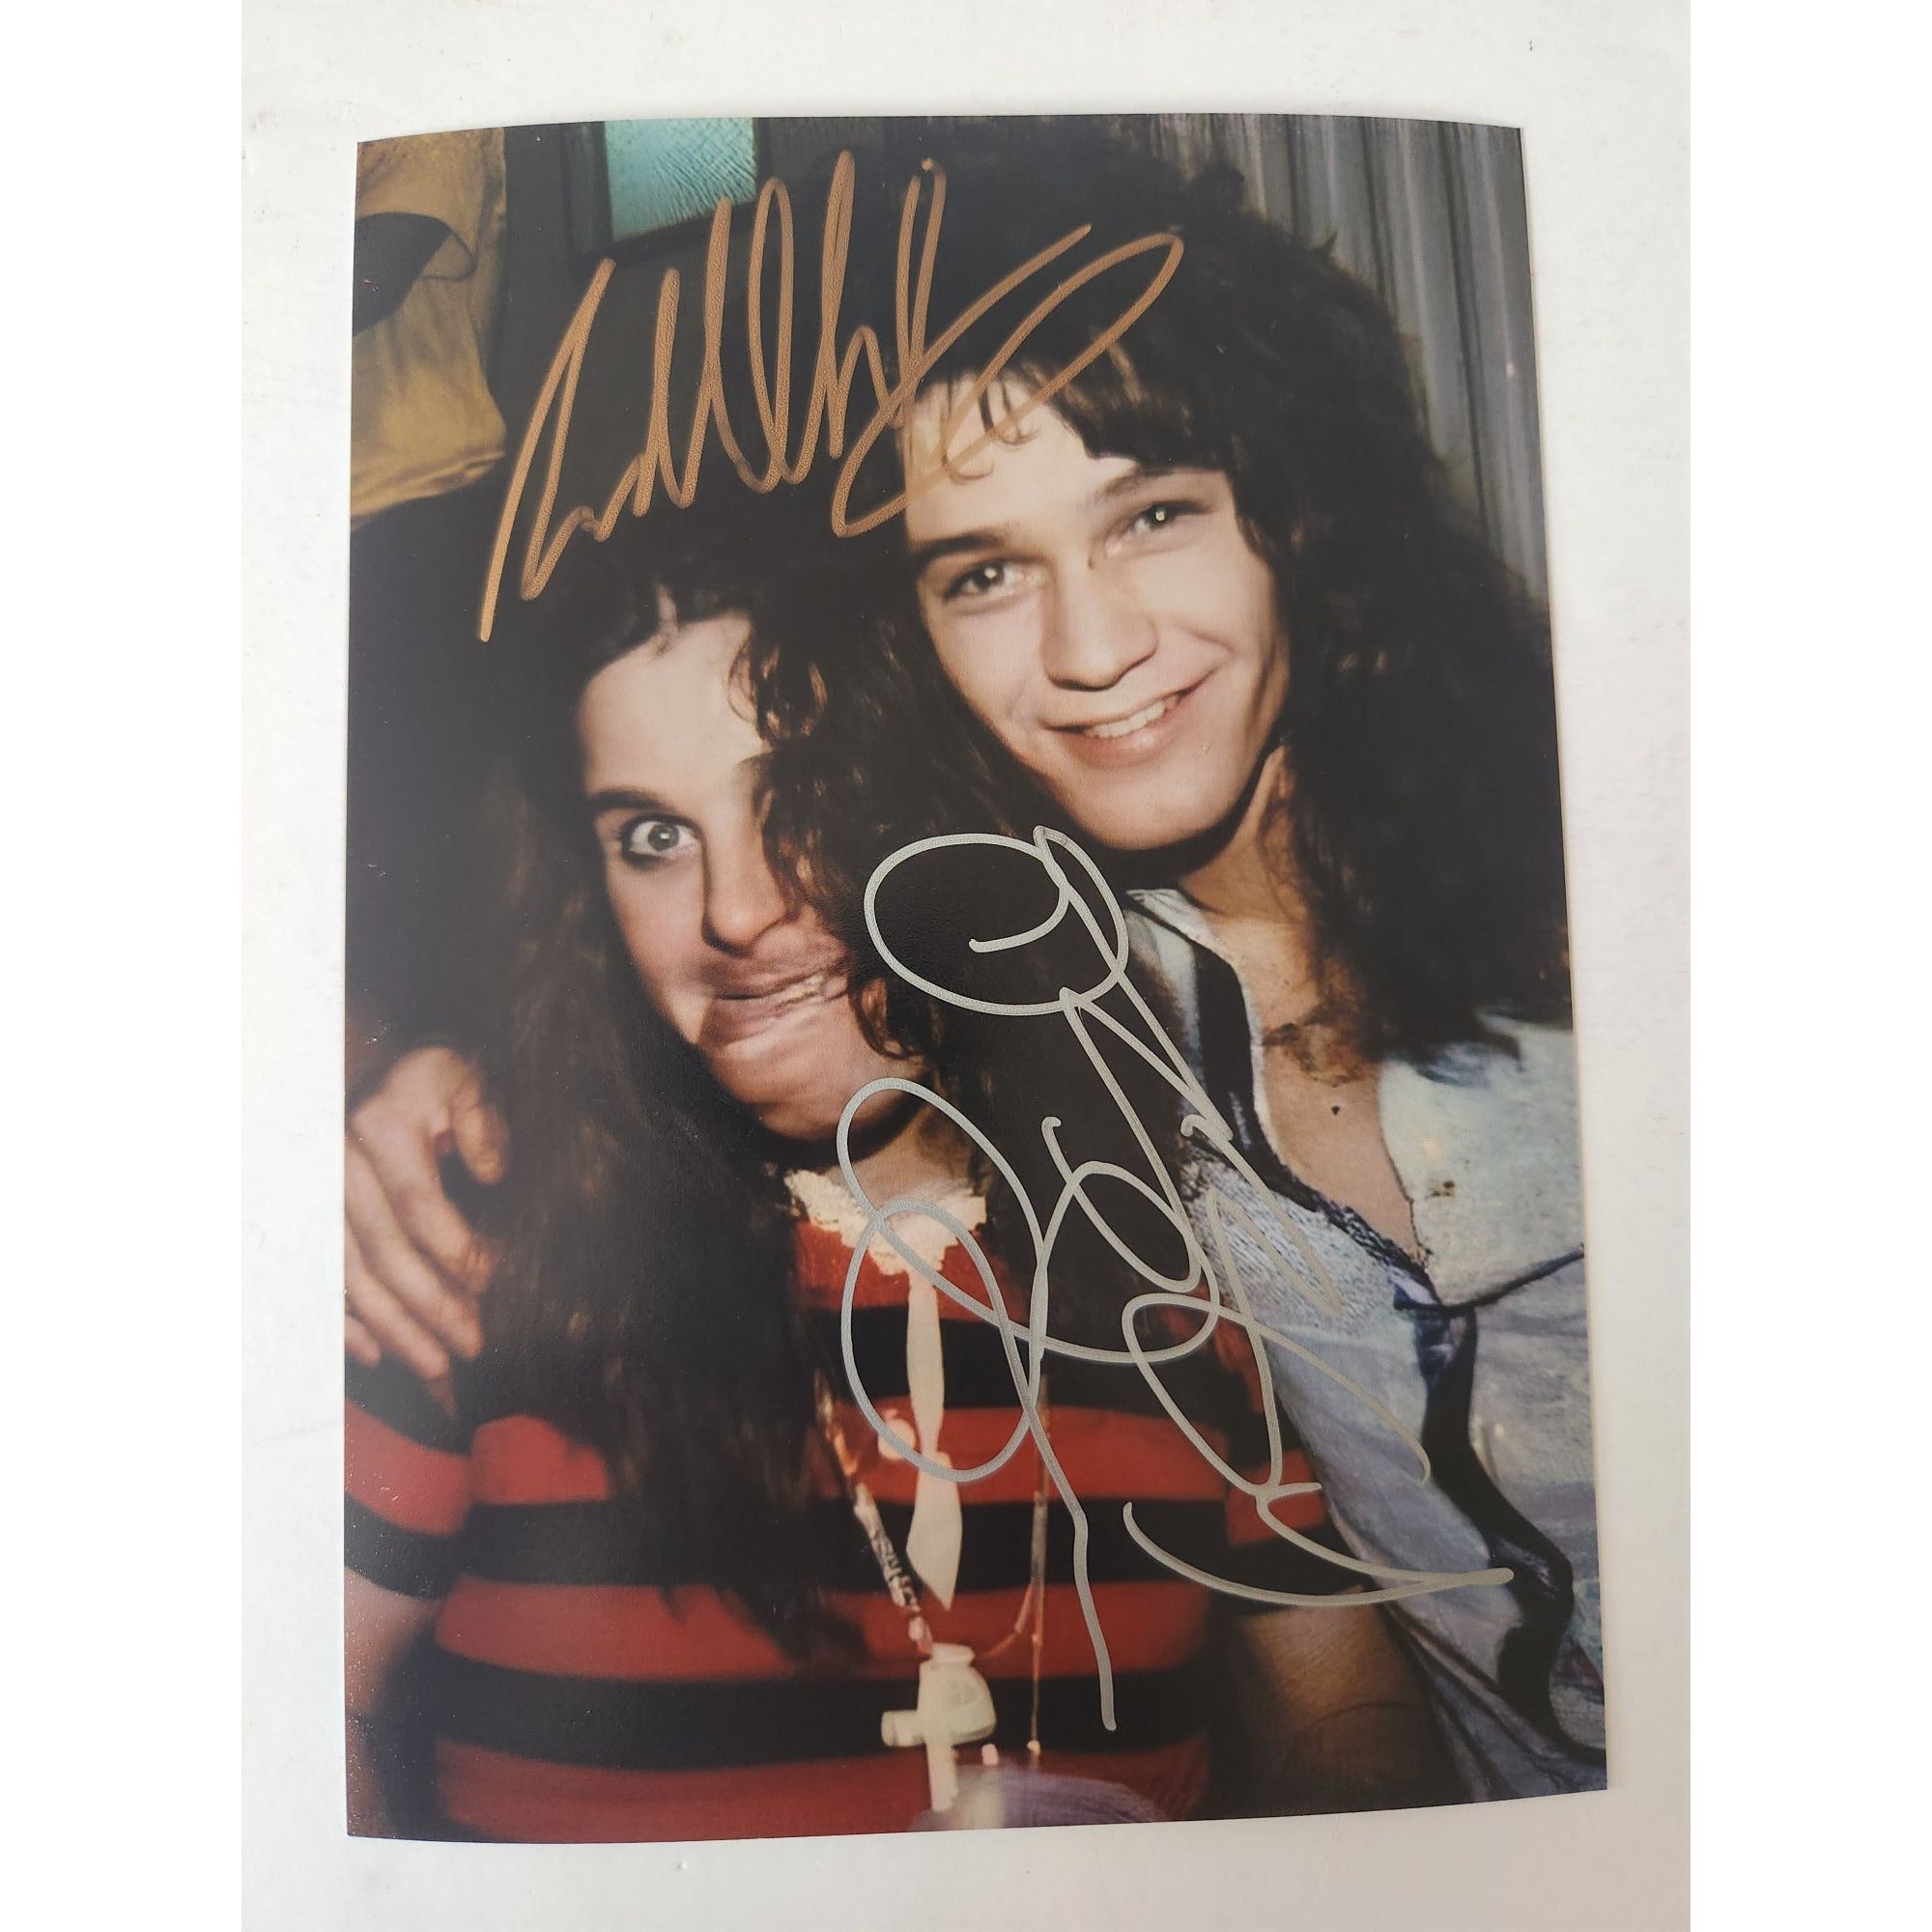 Eddie Van Halen and Ozzy Osbourne 5x7 photo signed with proof